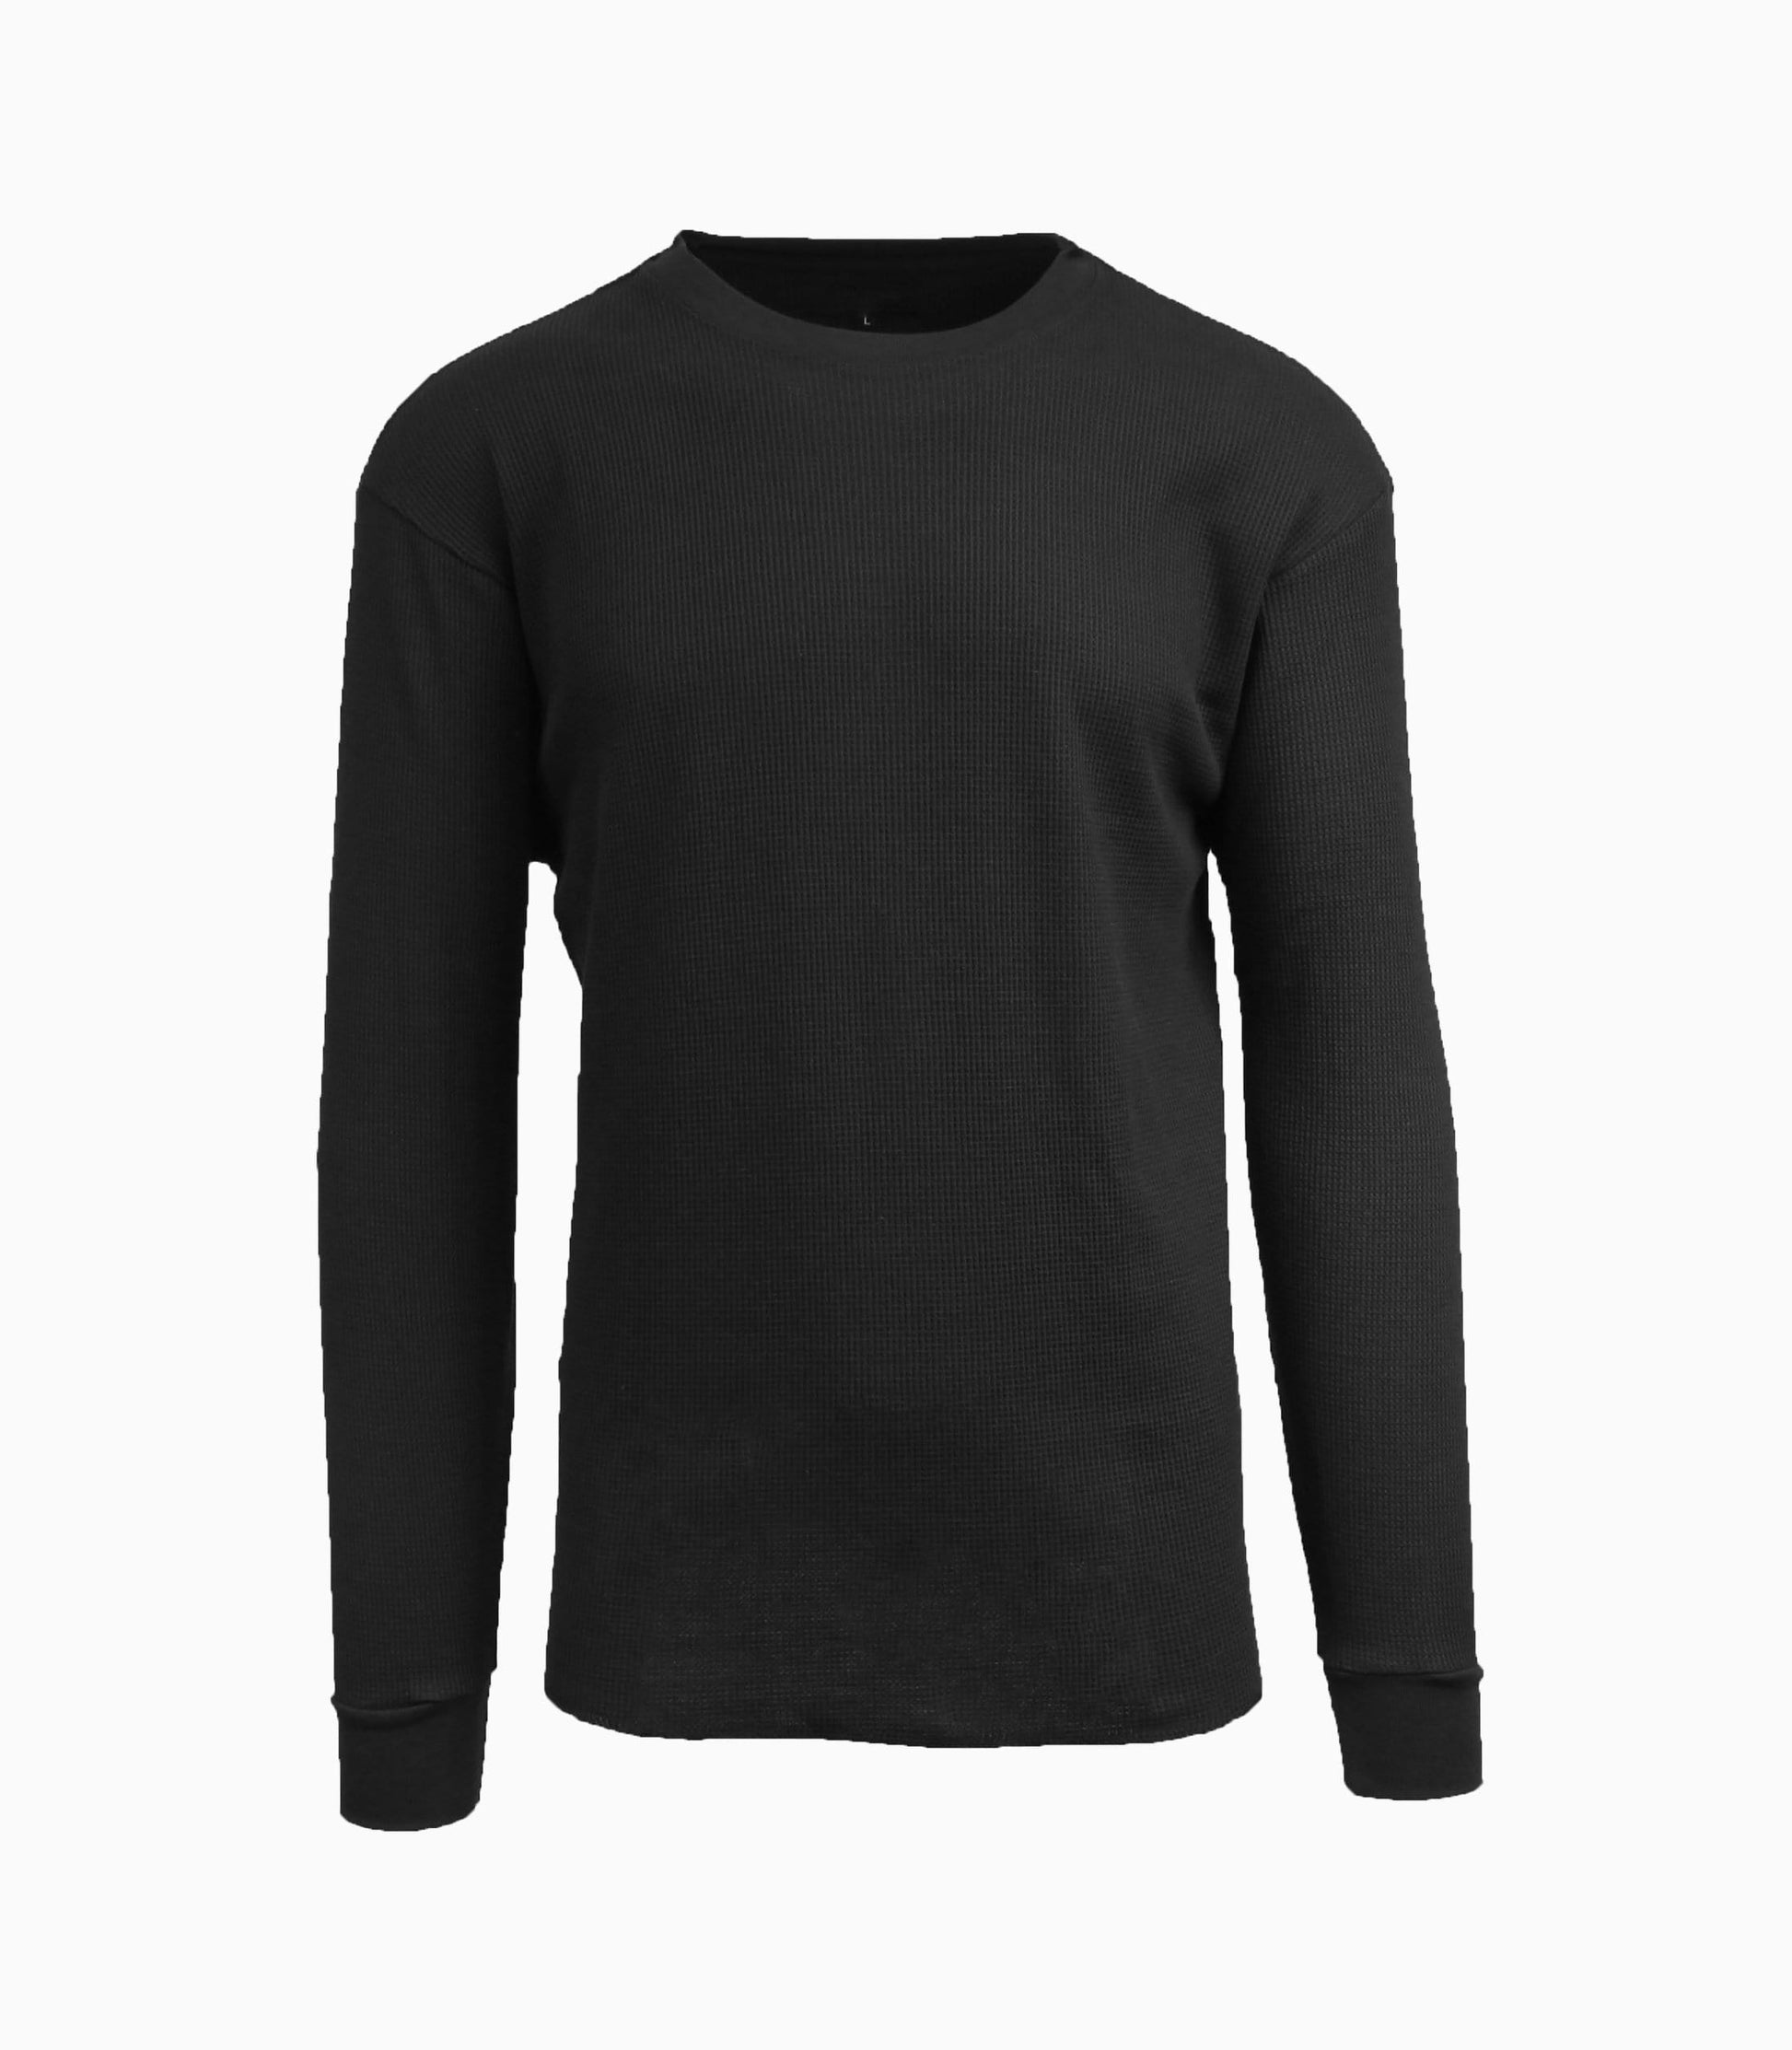 Men's Waffle Knit Thermal Shirt - GalaxybyHarvic